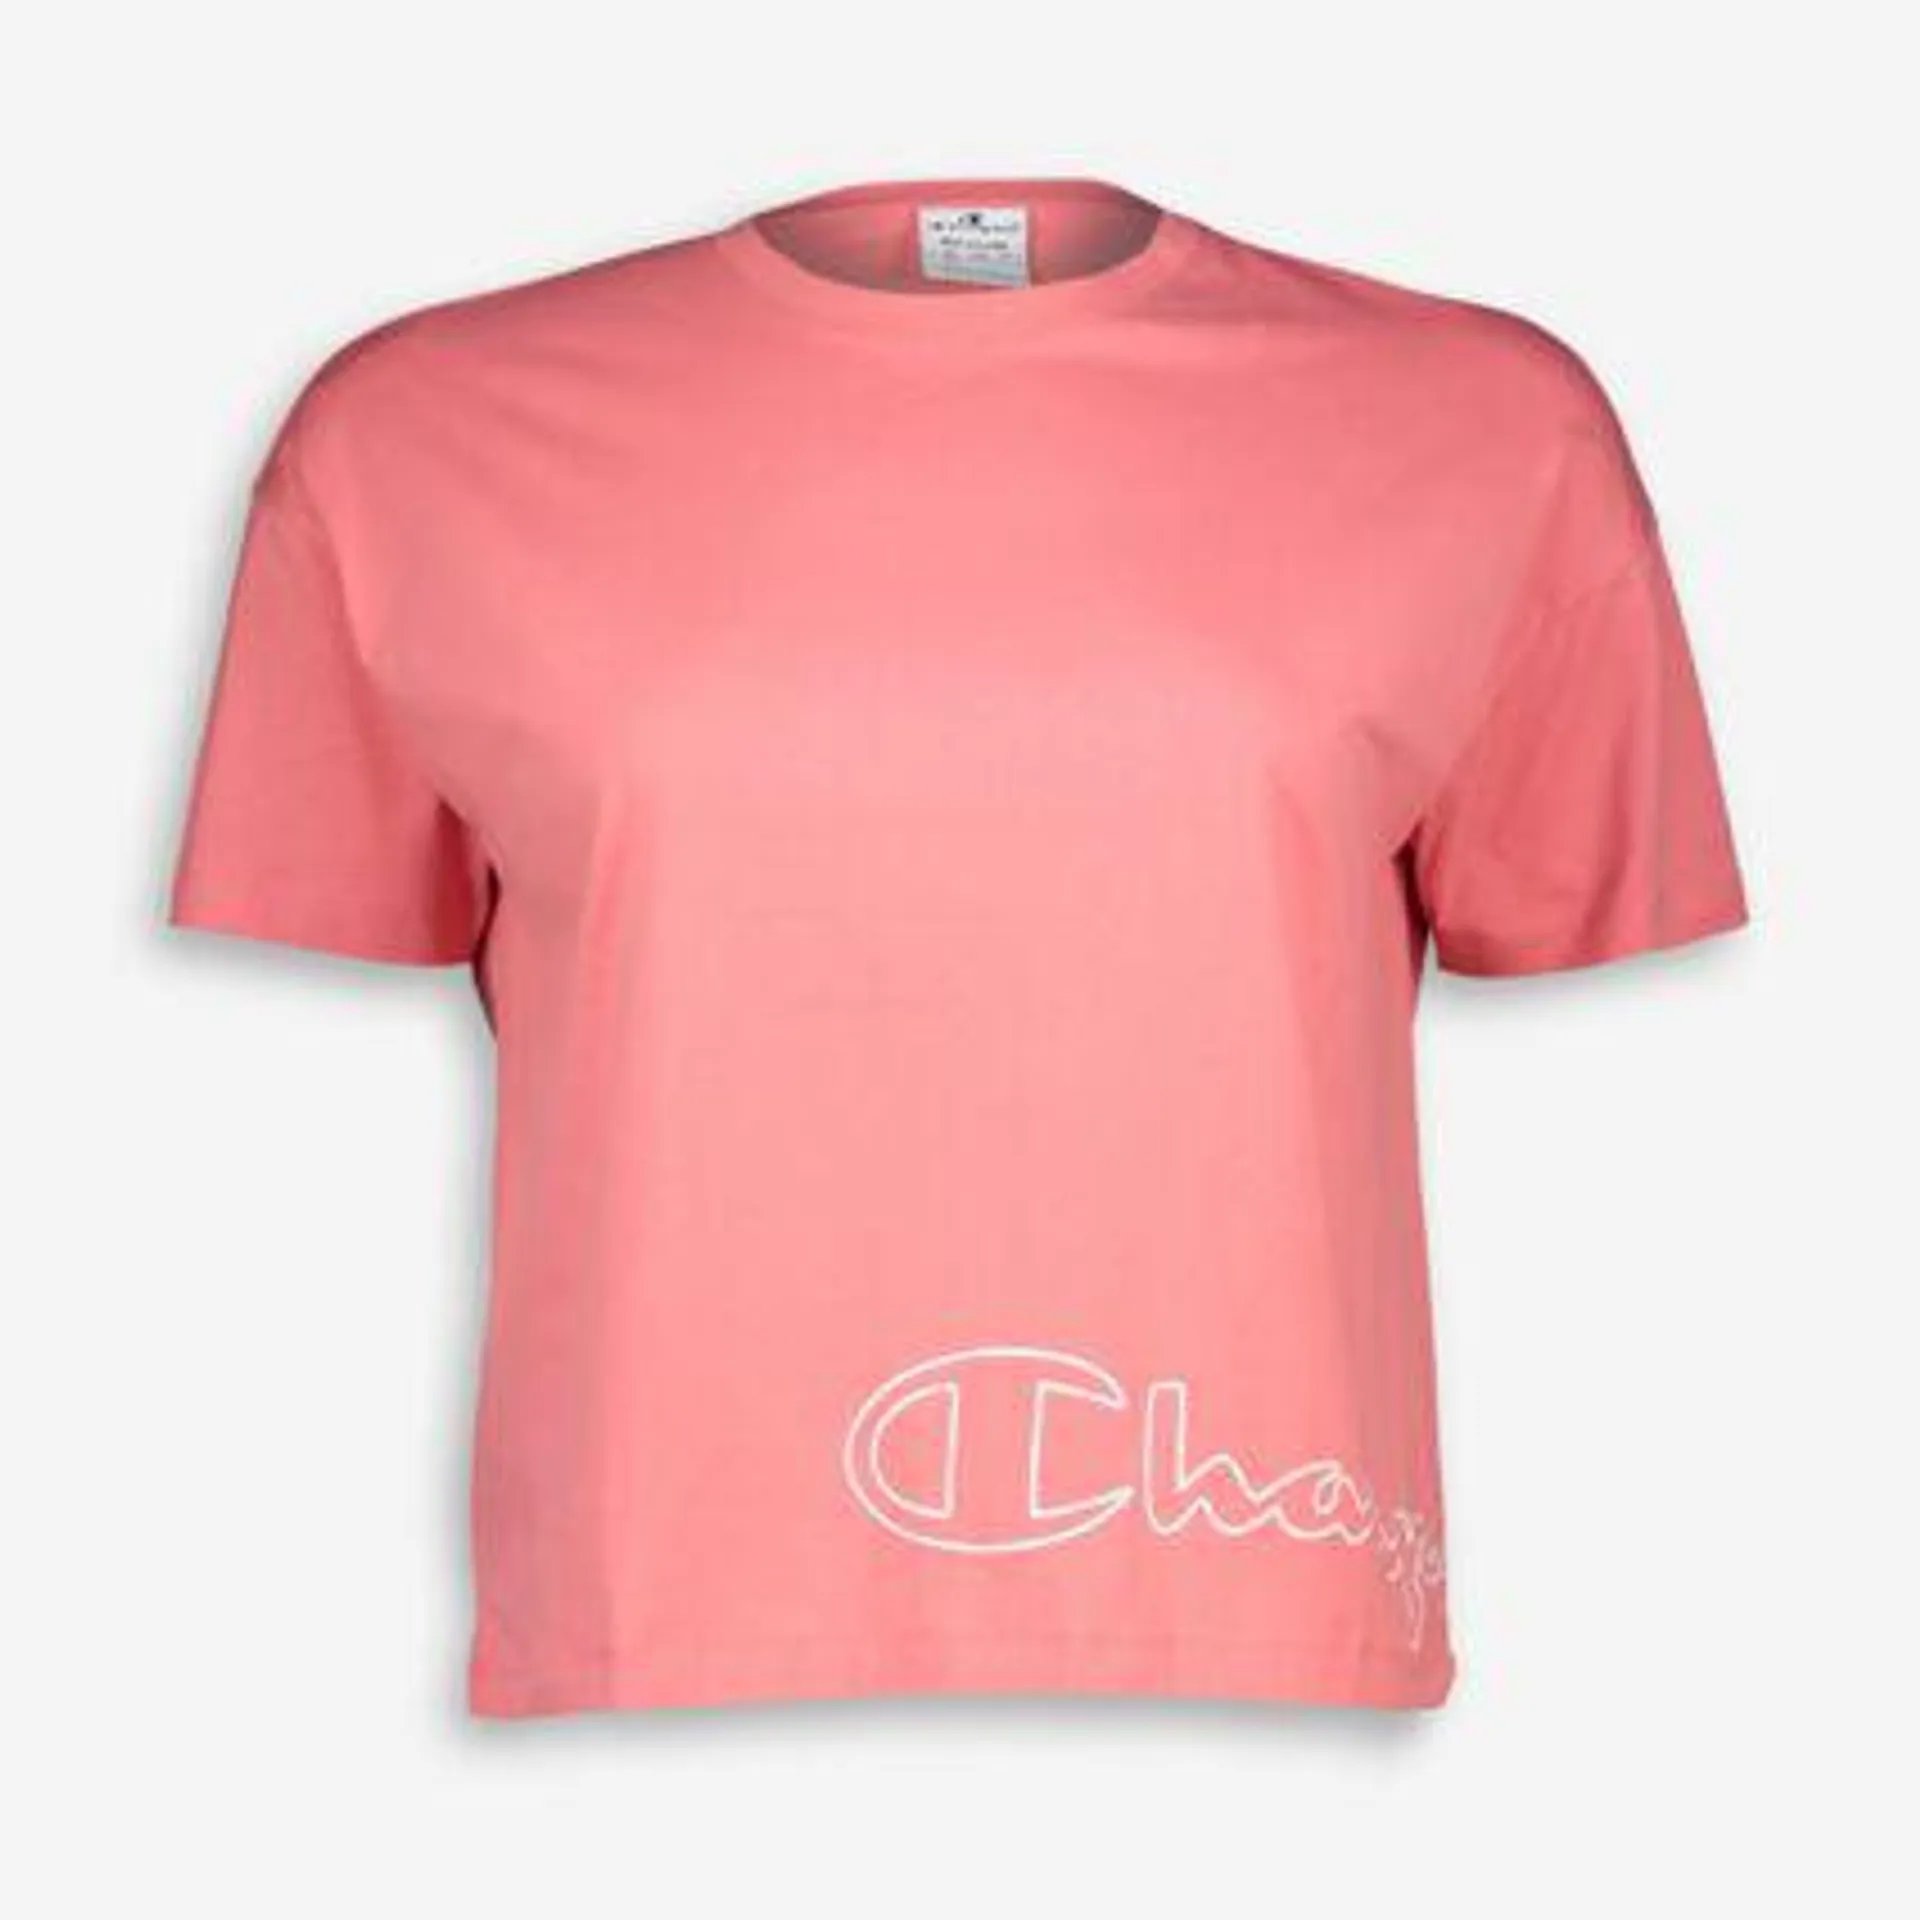 Coral Pink T Shirt